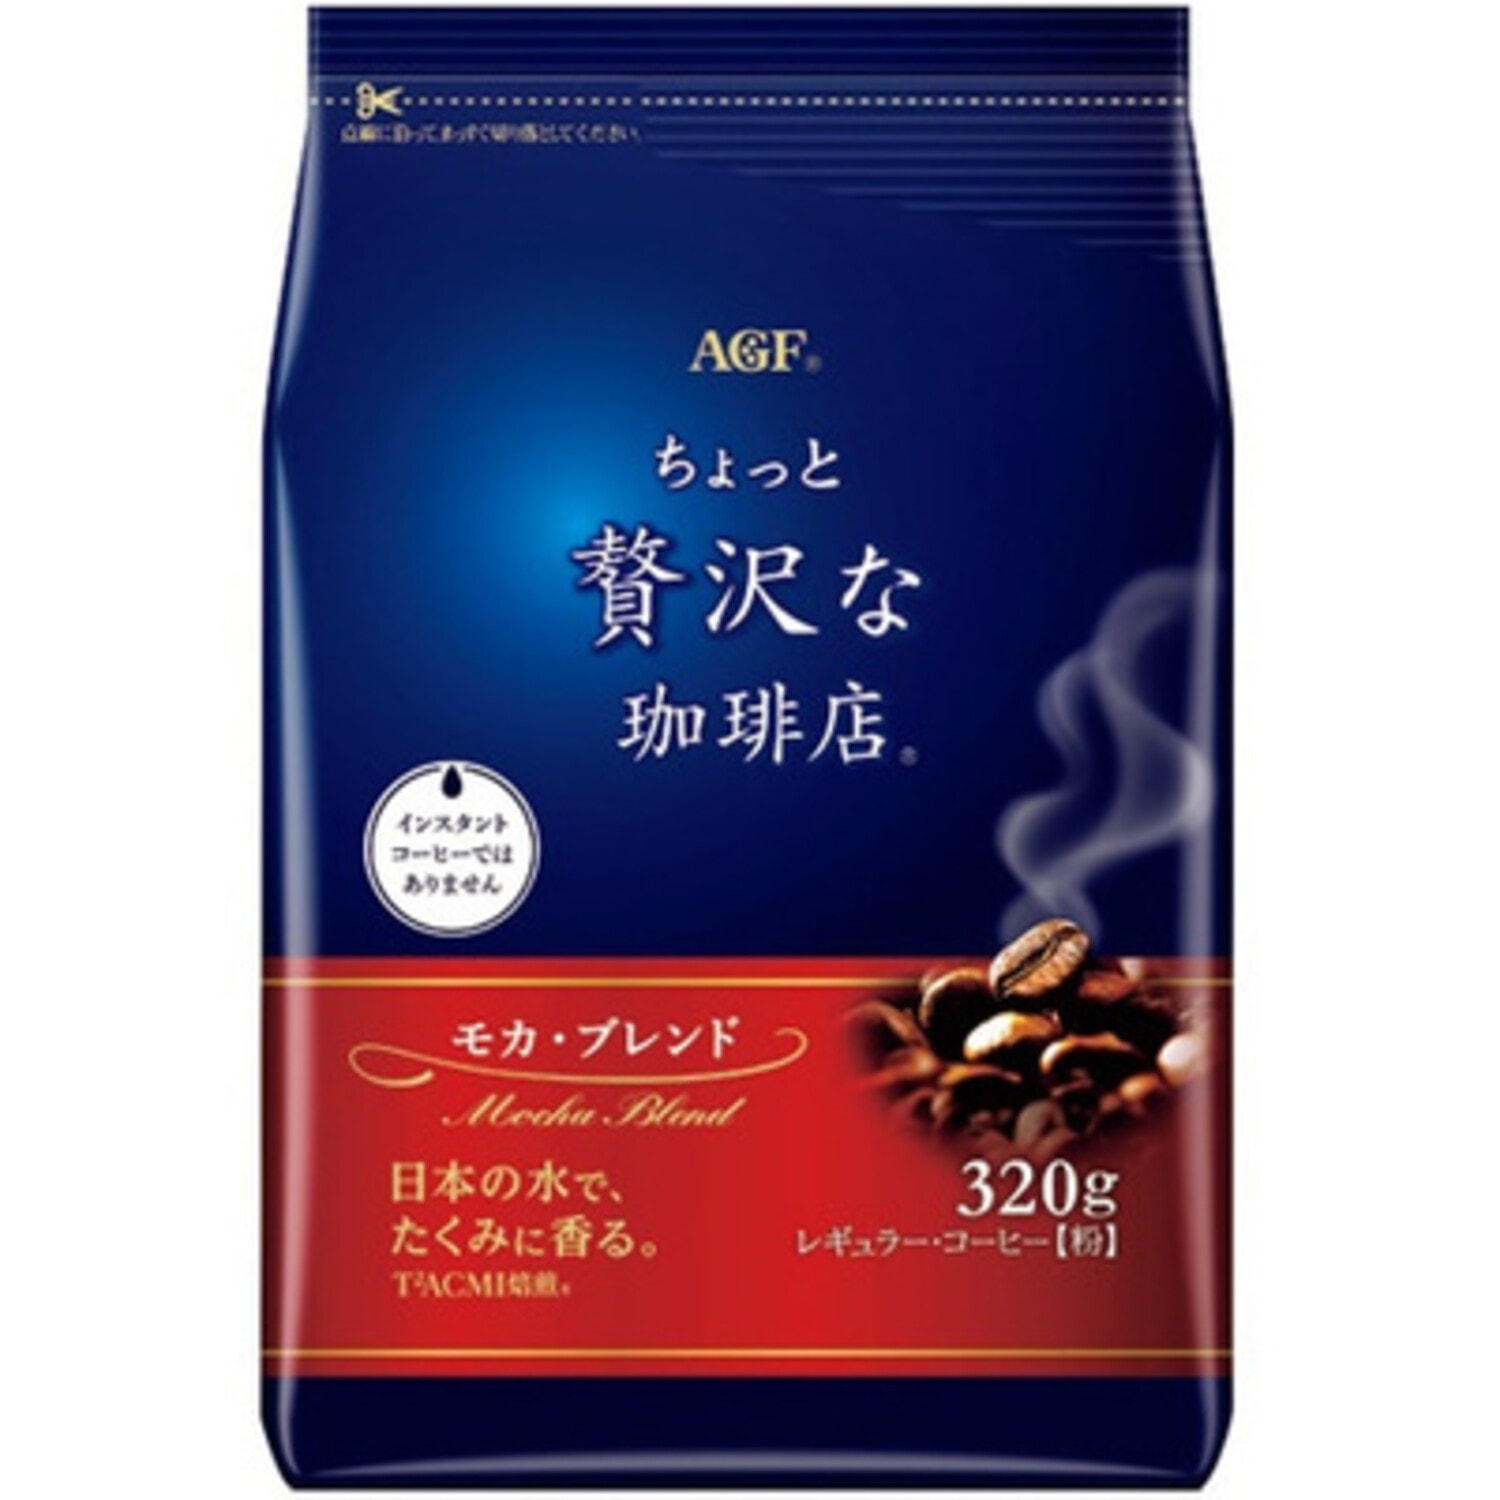 AGF Coffee Mokka, Кофе молотый купаж мокка, мягкая упаковка, 320г. / 308176